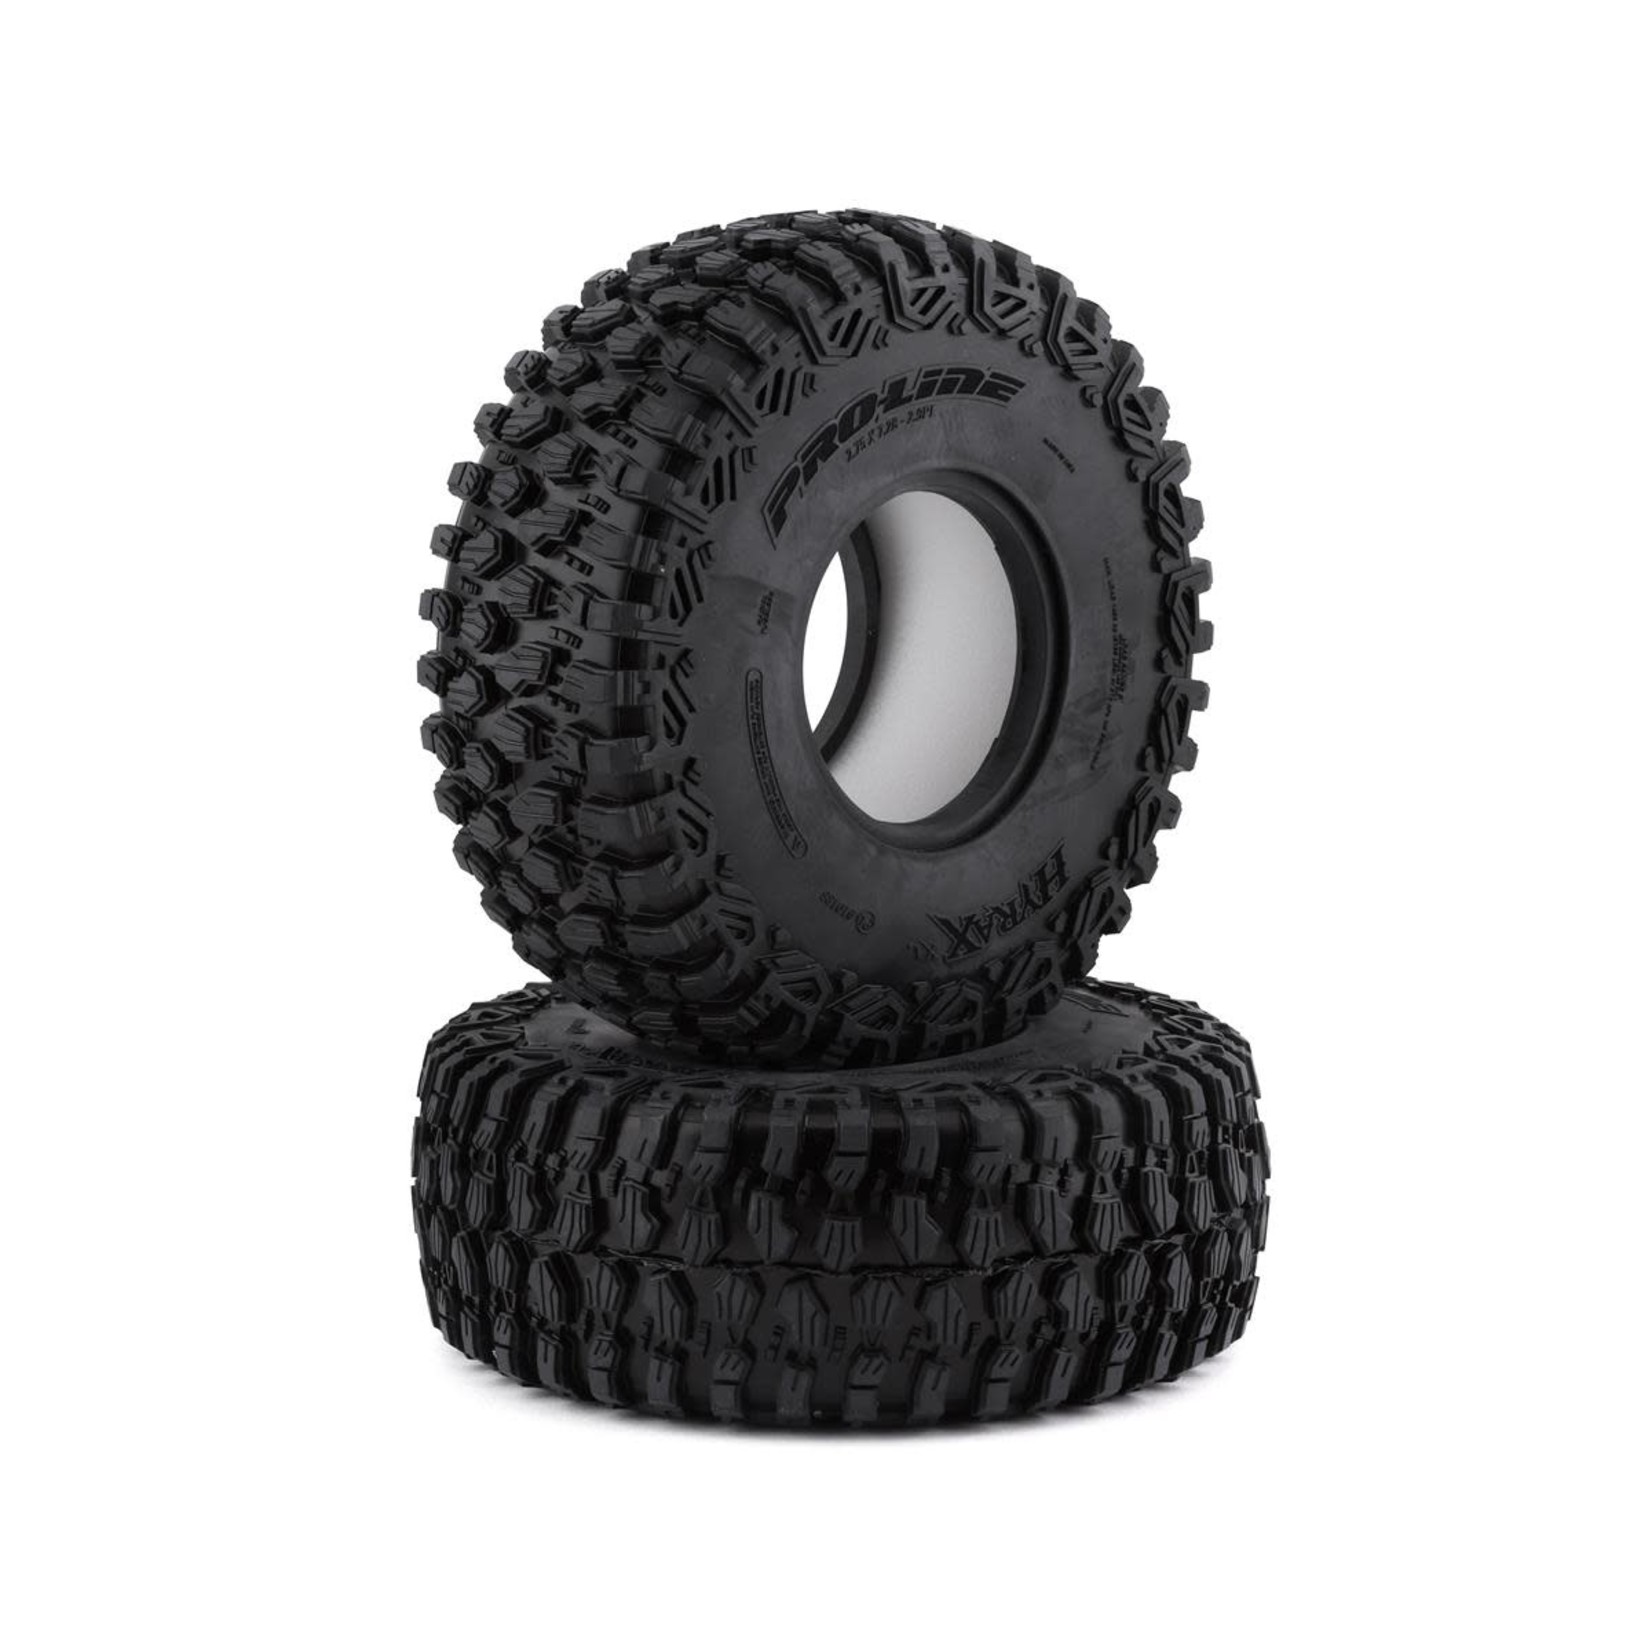 Pro-Line Pro-Line Hyrax XL 2.9" Rock Terrain Crawler Tires w/Memory Foam (2) (G8) #10186-14